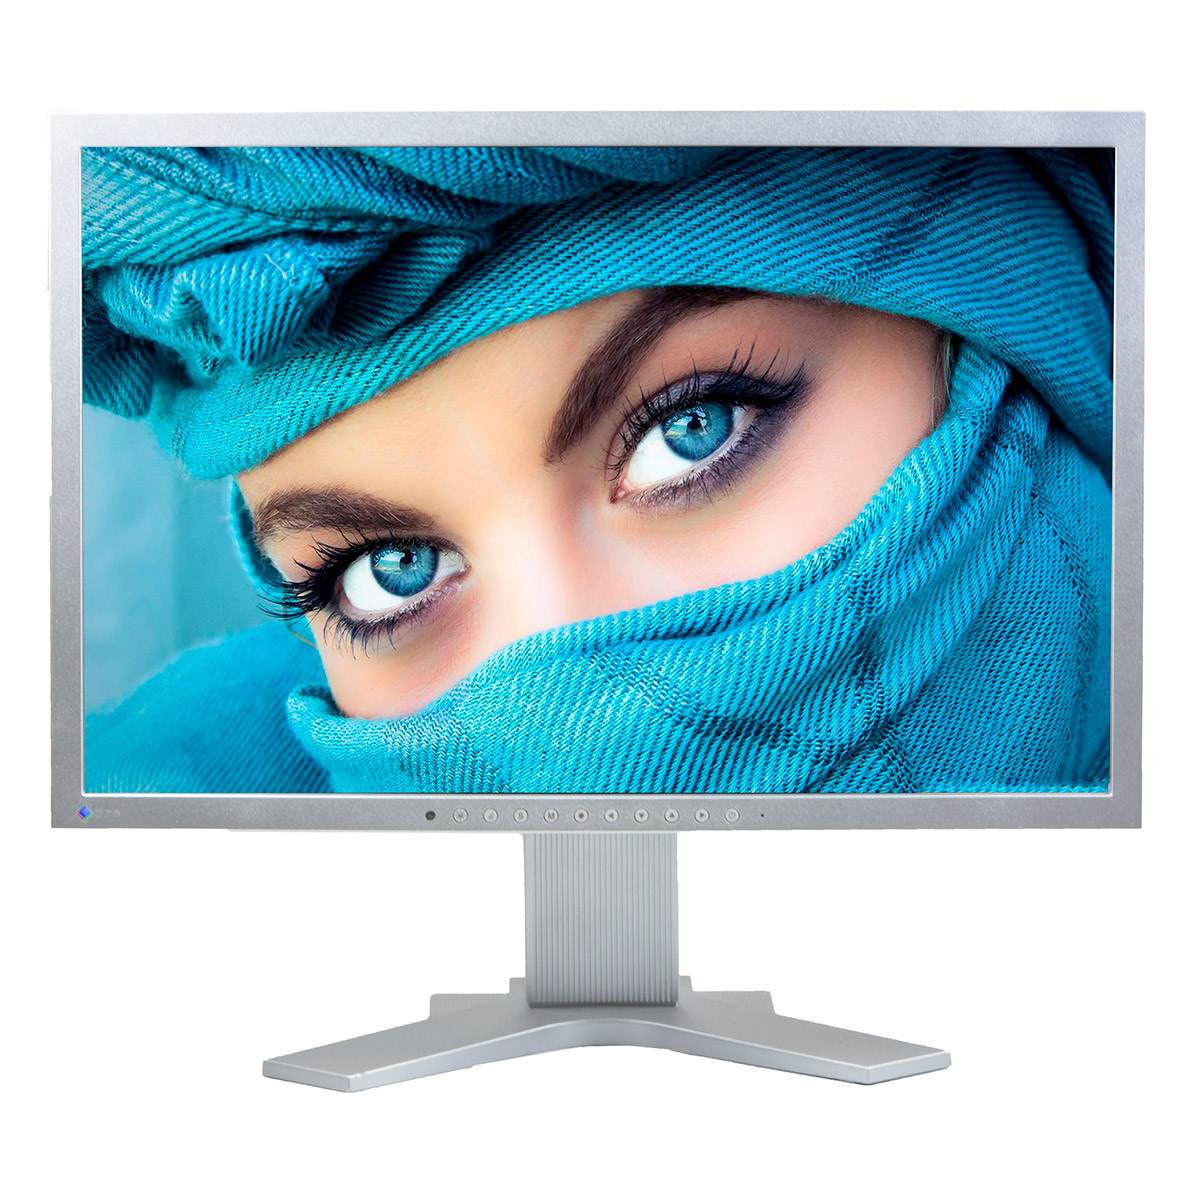 EIZO FlexScan S2202W  22 inch LCD  1680 x 1050  16:10  negru - argintiu  monitor refurbished